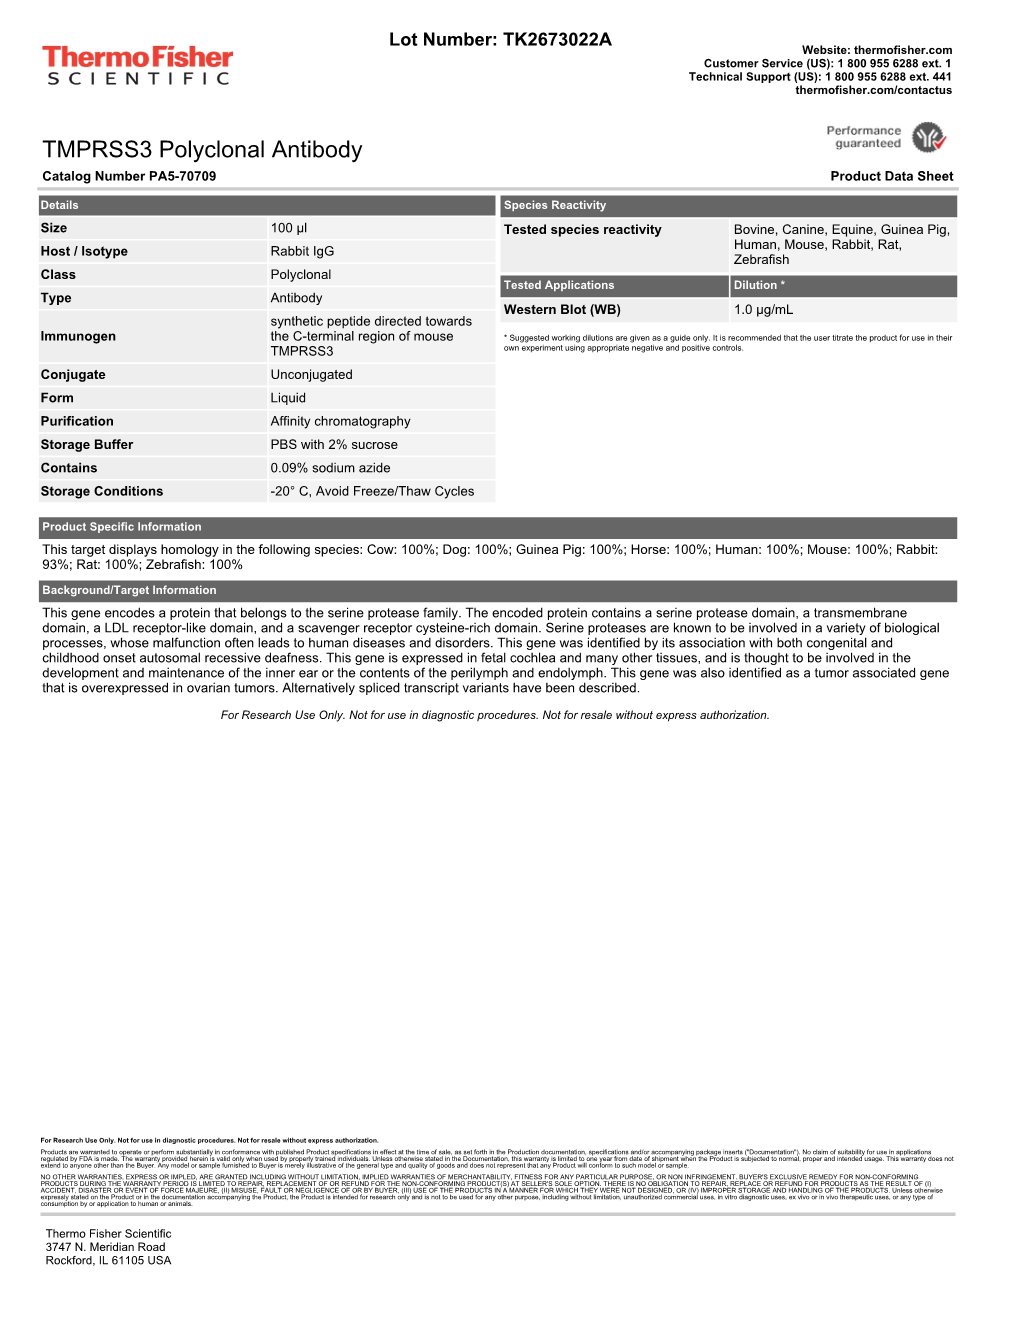 TMPRSS3 Polyclonal Antibody Catalog Number PA5-70709 Product Data Sheet